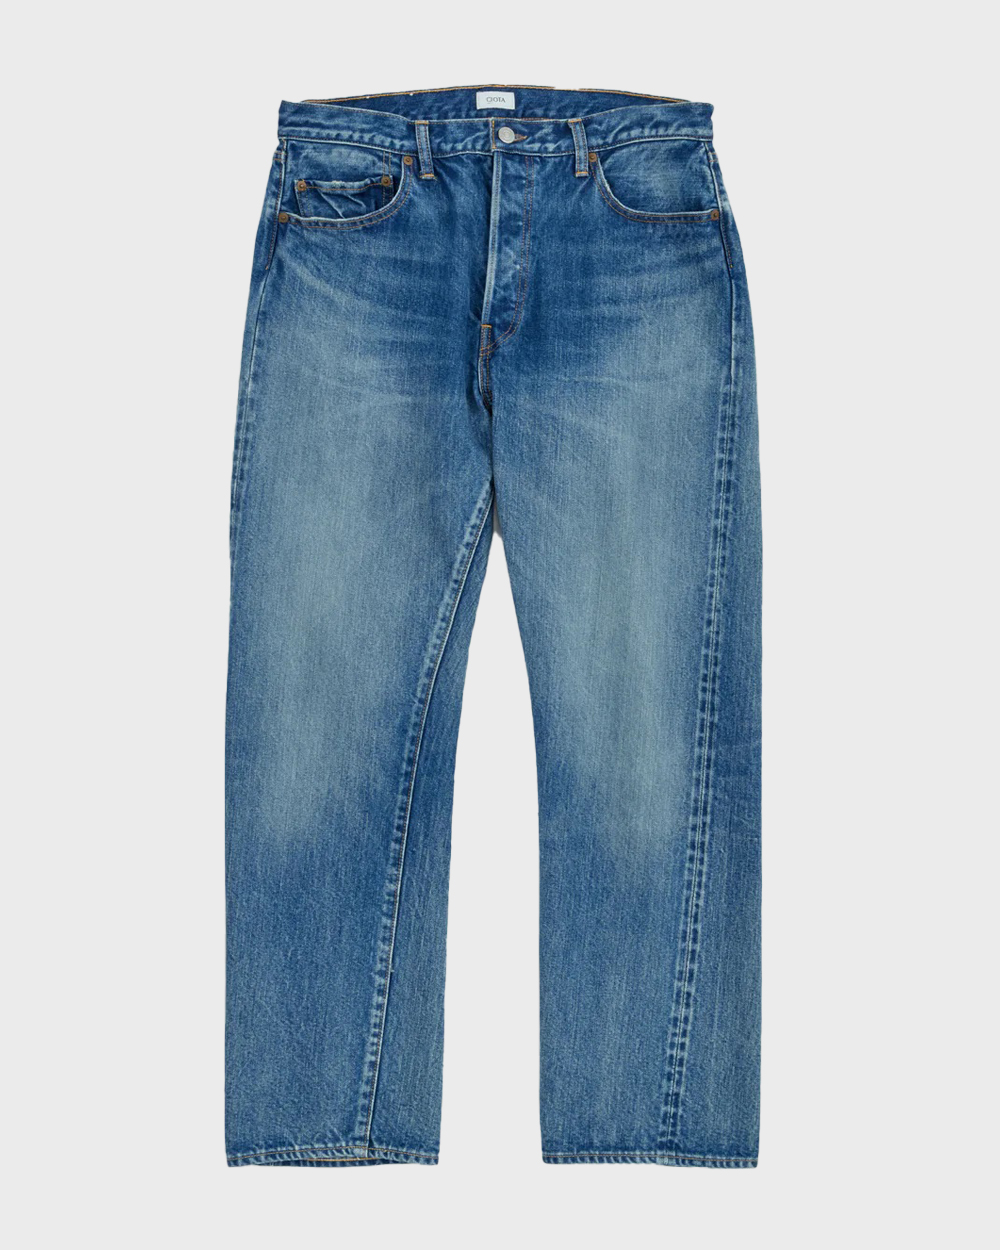 New Straight 5 Pocket Pants (Medium Dark Blue Damage)